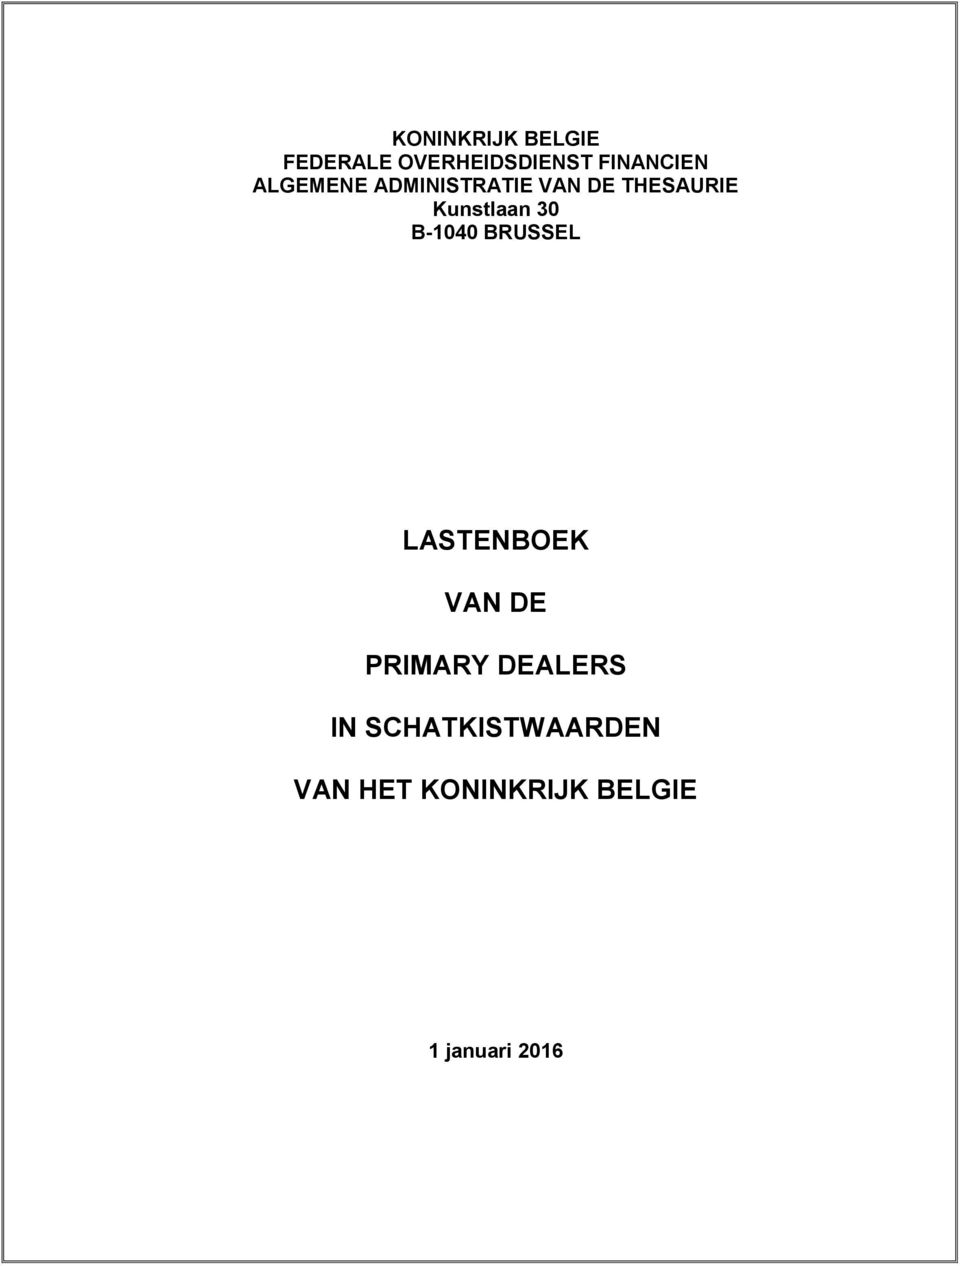 B-1040 BRUSSEL LASTENBOEK VAN DE PRIMARY DEALERS IN